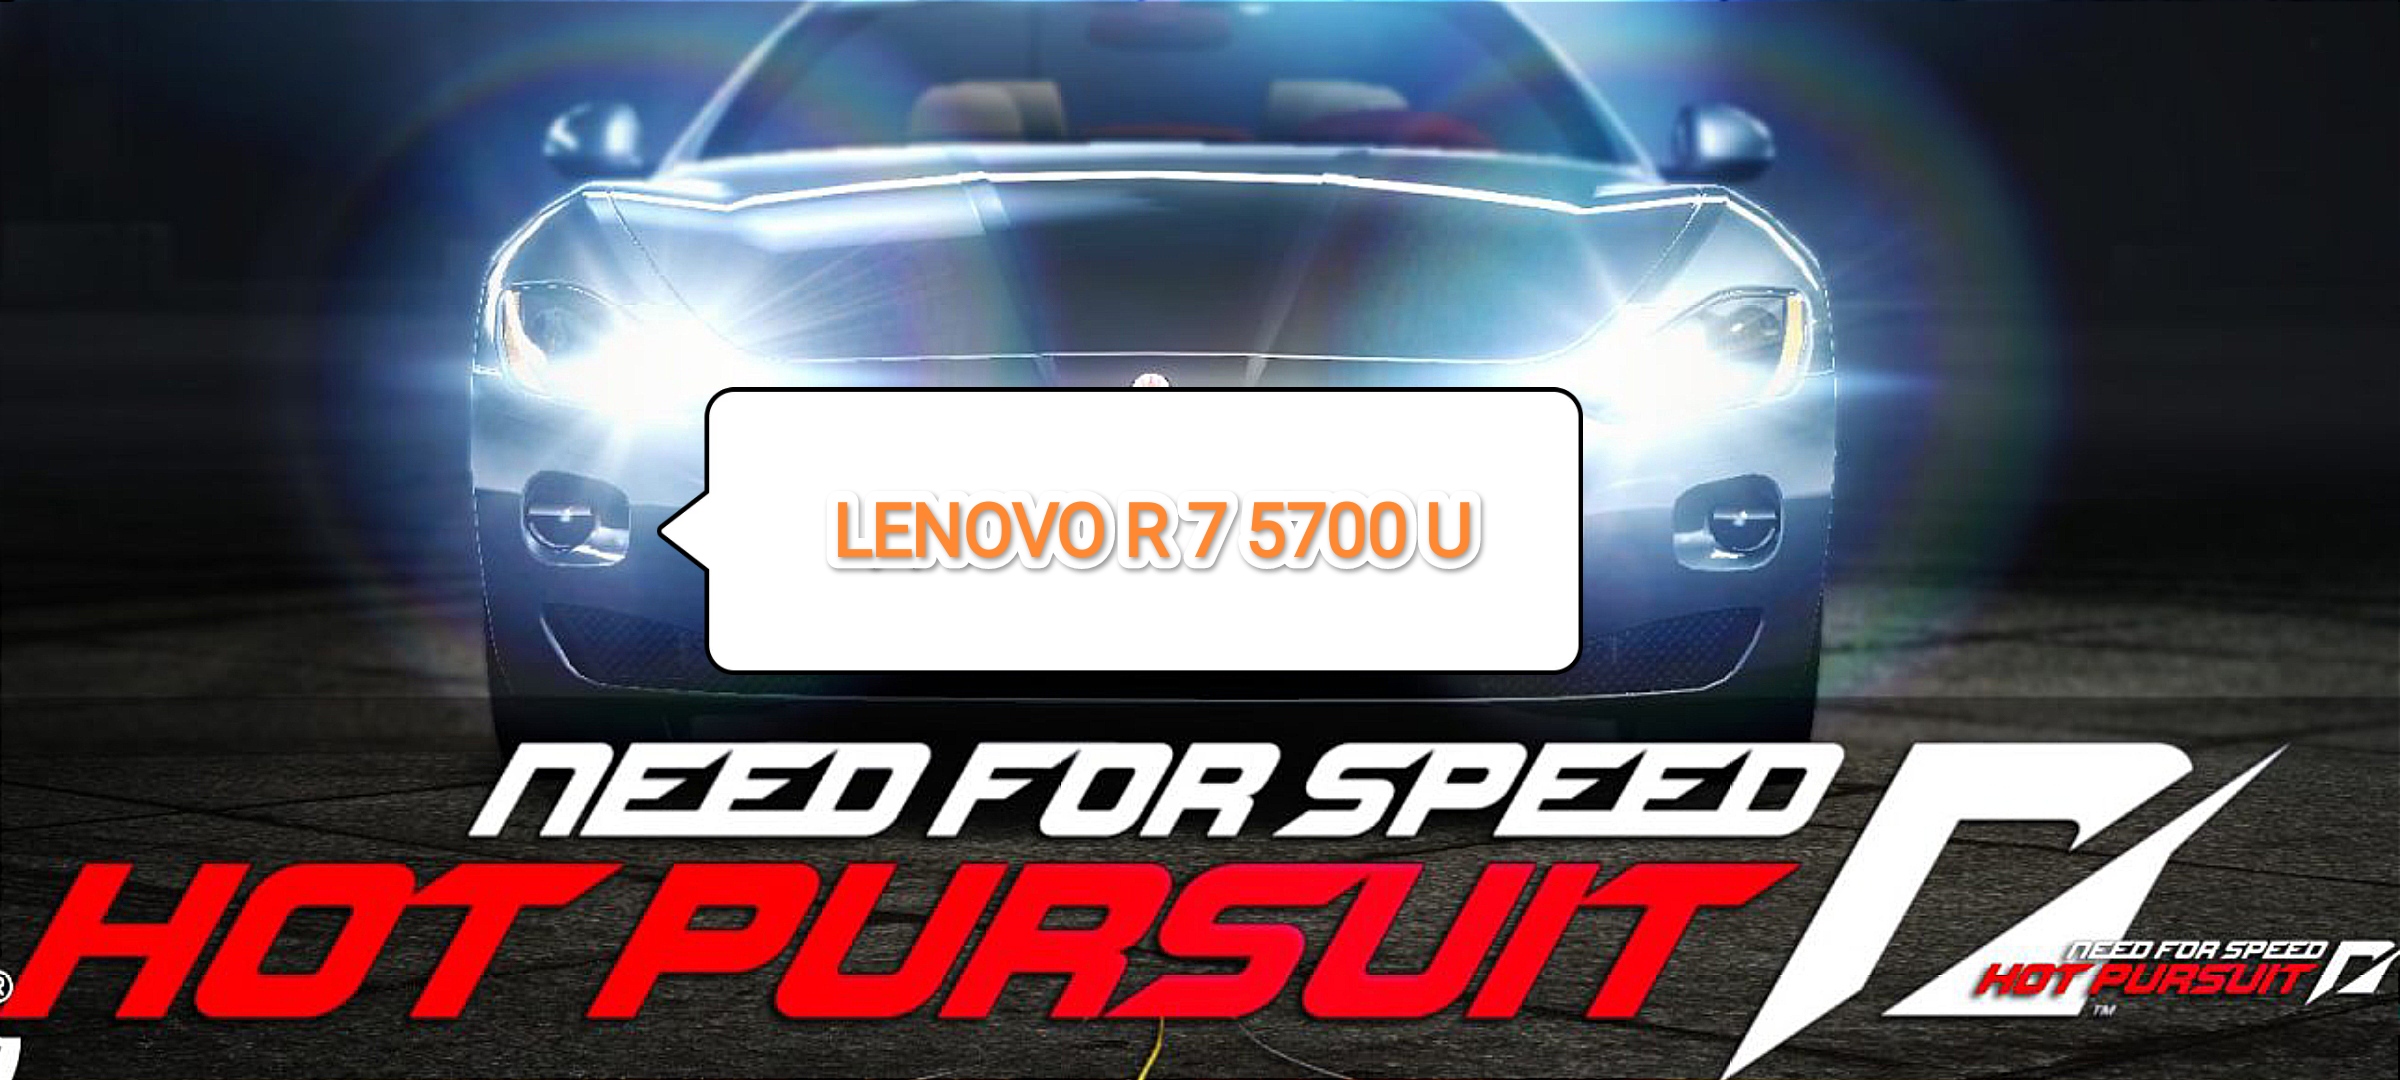 Need for Speed™ Hot Pursuit v.1.0.5.0s - настройки графики для 60 фпс на слабом ПК (Lenovo R 7 5700)